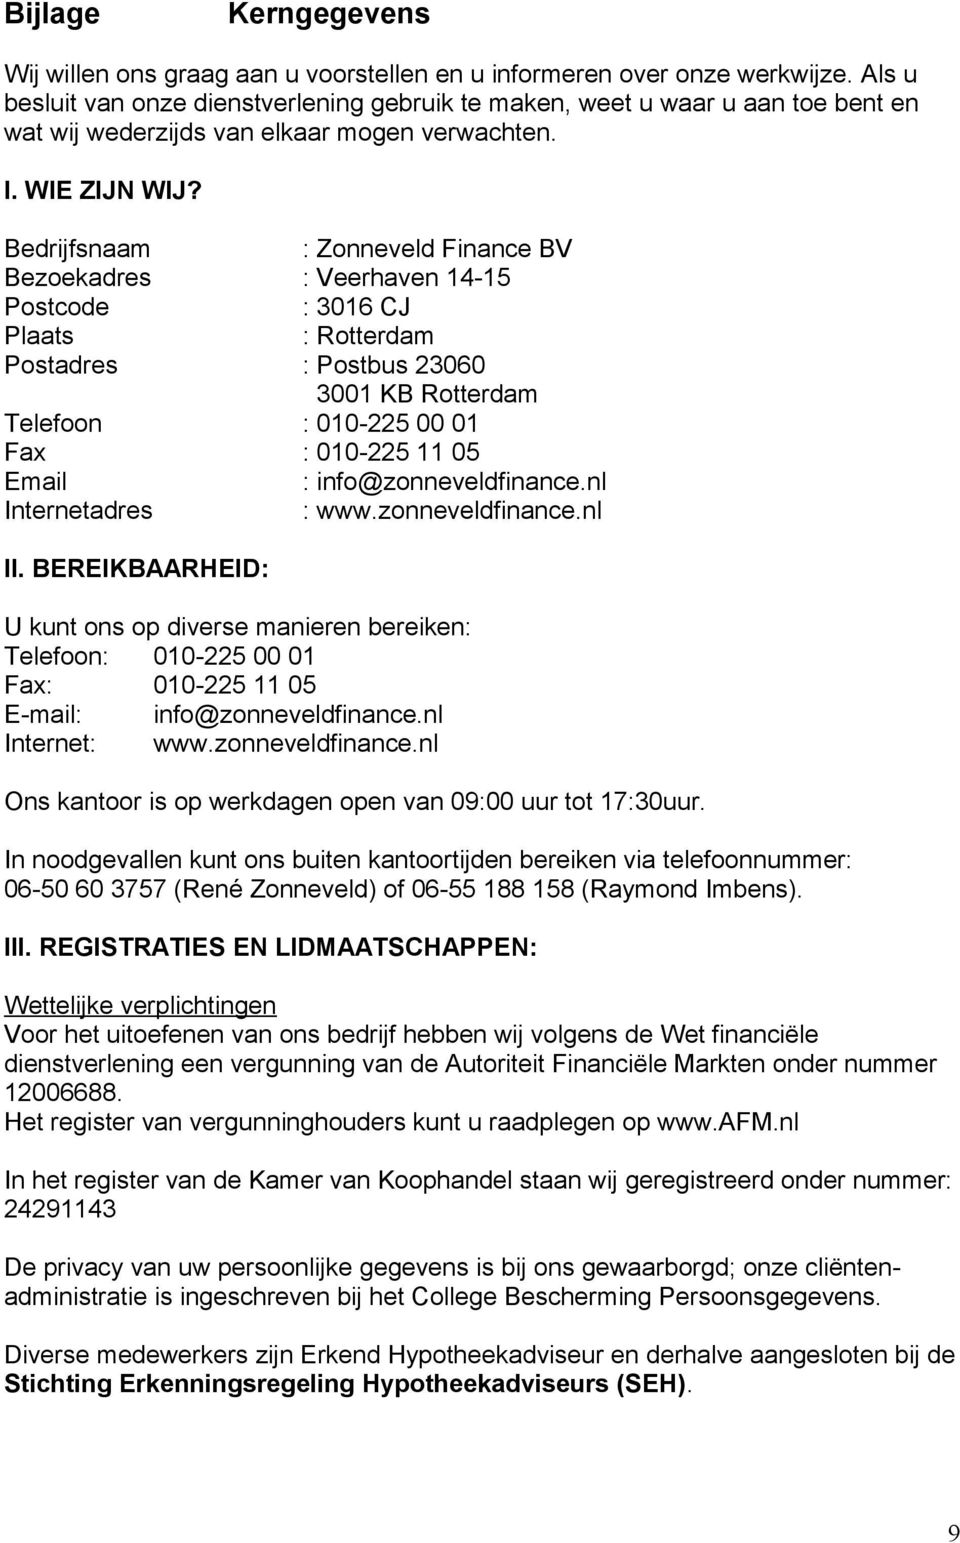 Bedrijfsnaam : Zonneveld Finance BV Bezoekadres : Veerhaven 14-15 Postcode : 3016 CJ Plaats : Rotterdam Postadres : Postbus 23060 3001 KB Rotterdam Telefoon : 010-225 00 01 Fax : 010-225 11 05 Email